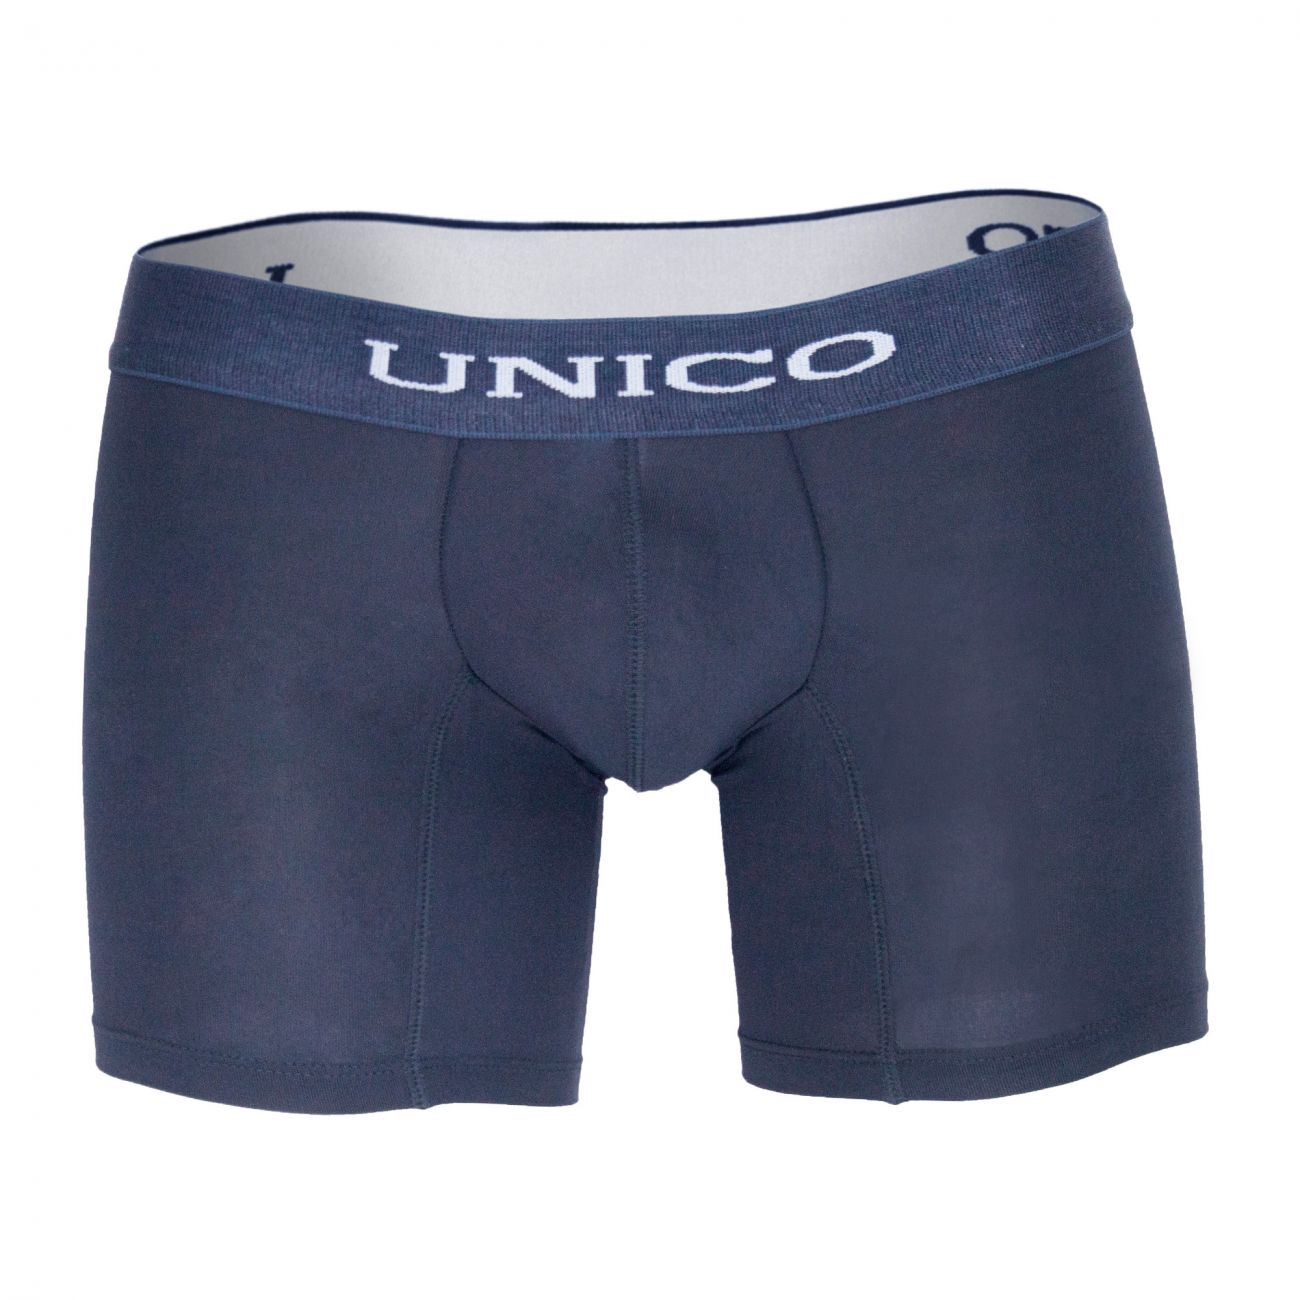 Unico (1212010020696) Boxer Briefs Asfalto Microfiber